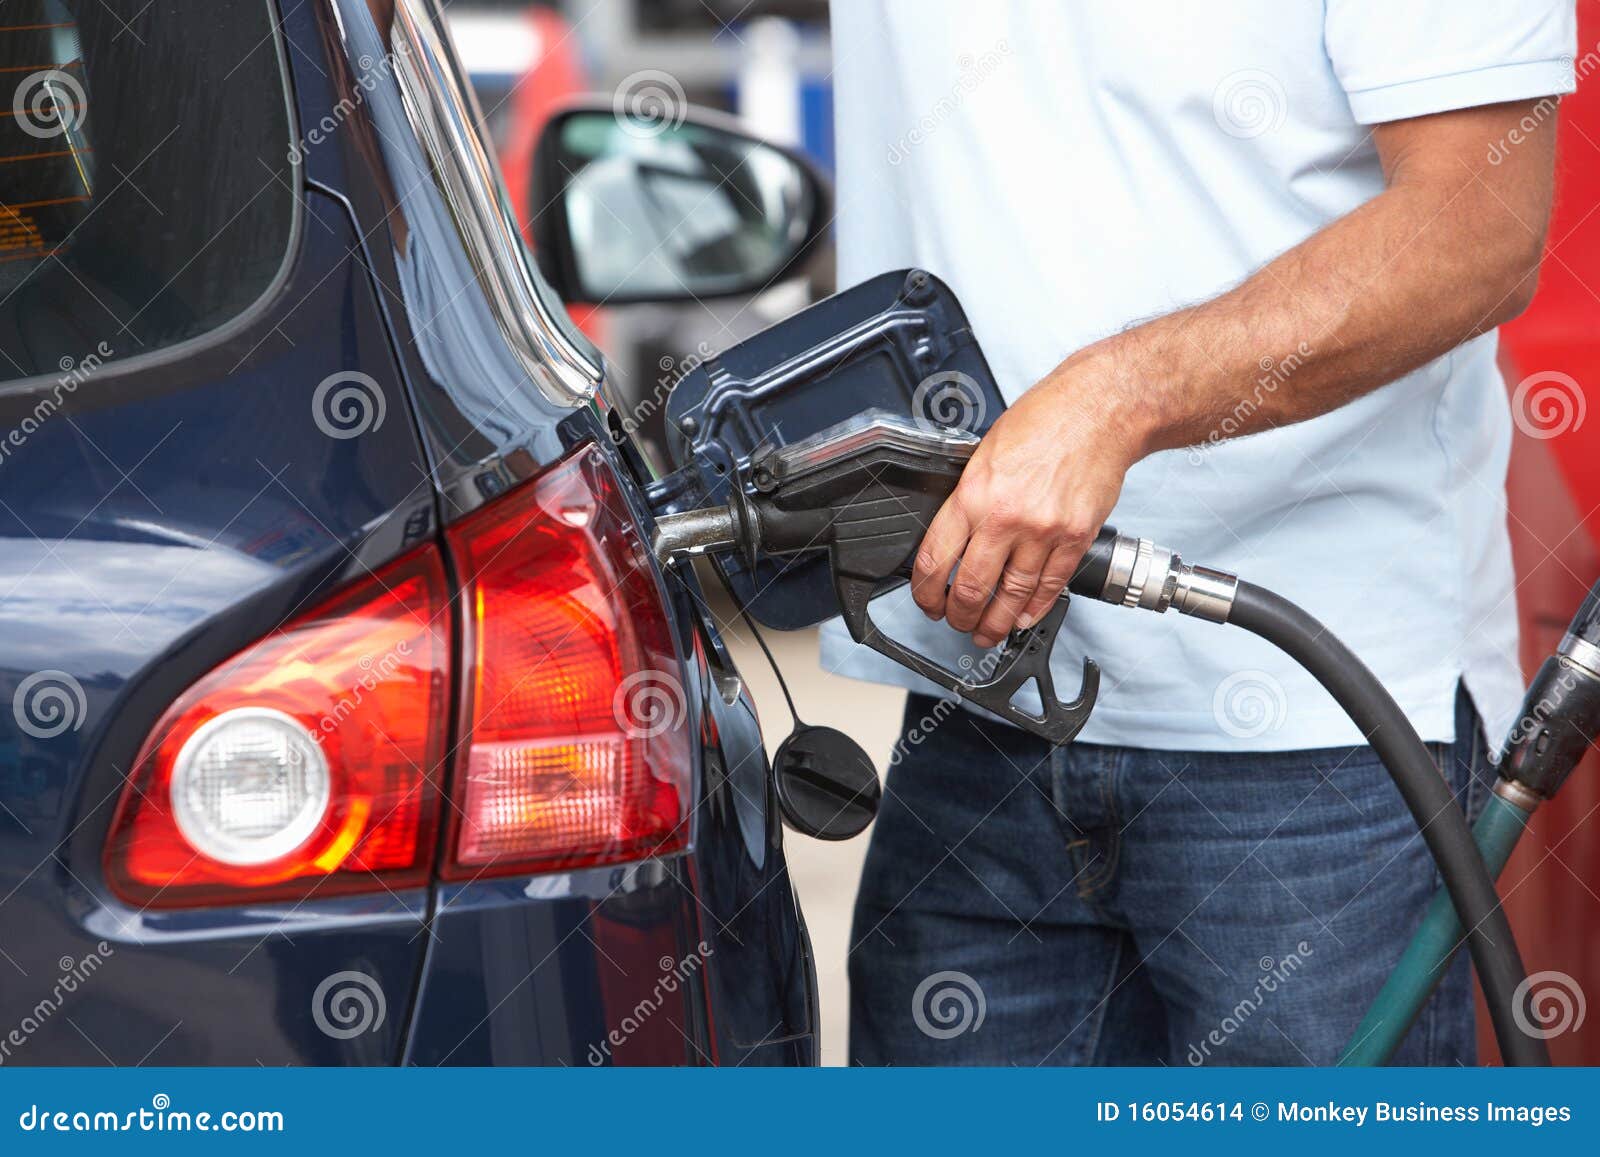 detail of male motorist filling car with diesel